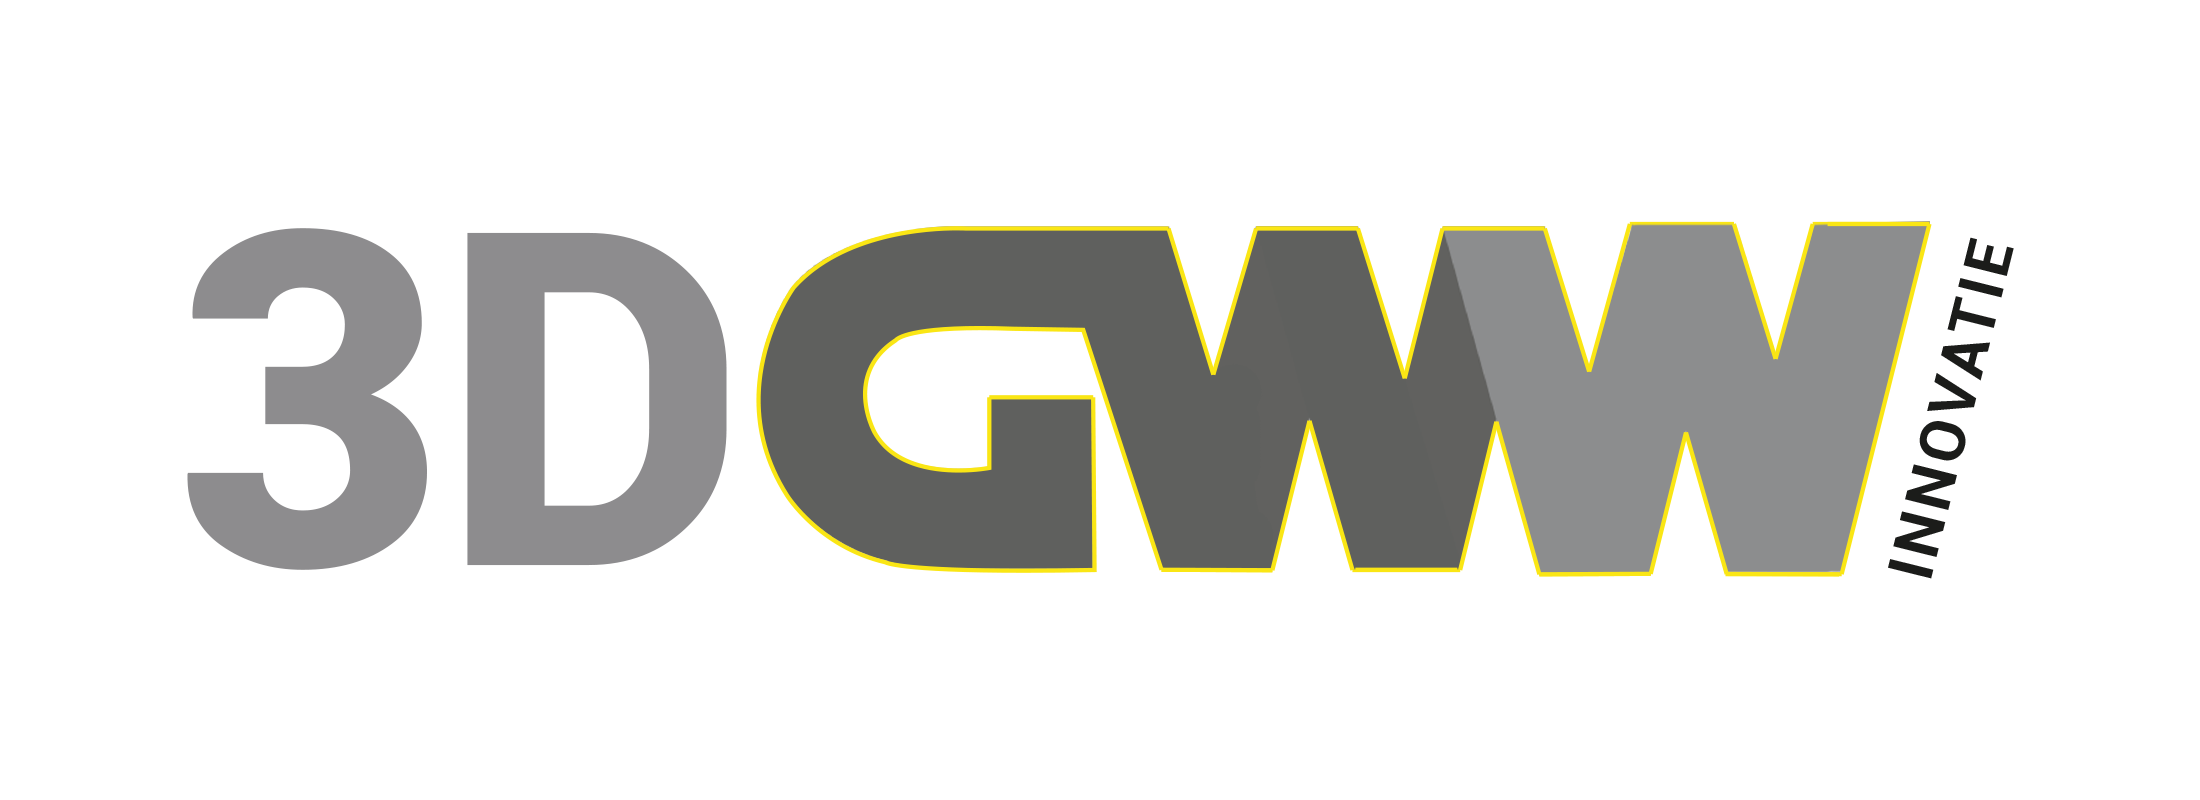 3D GWW